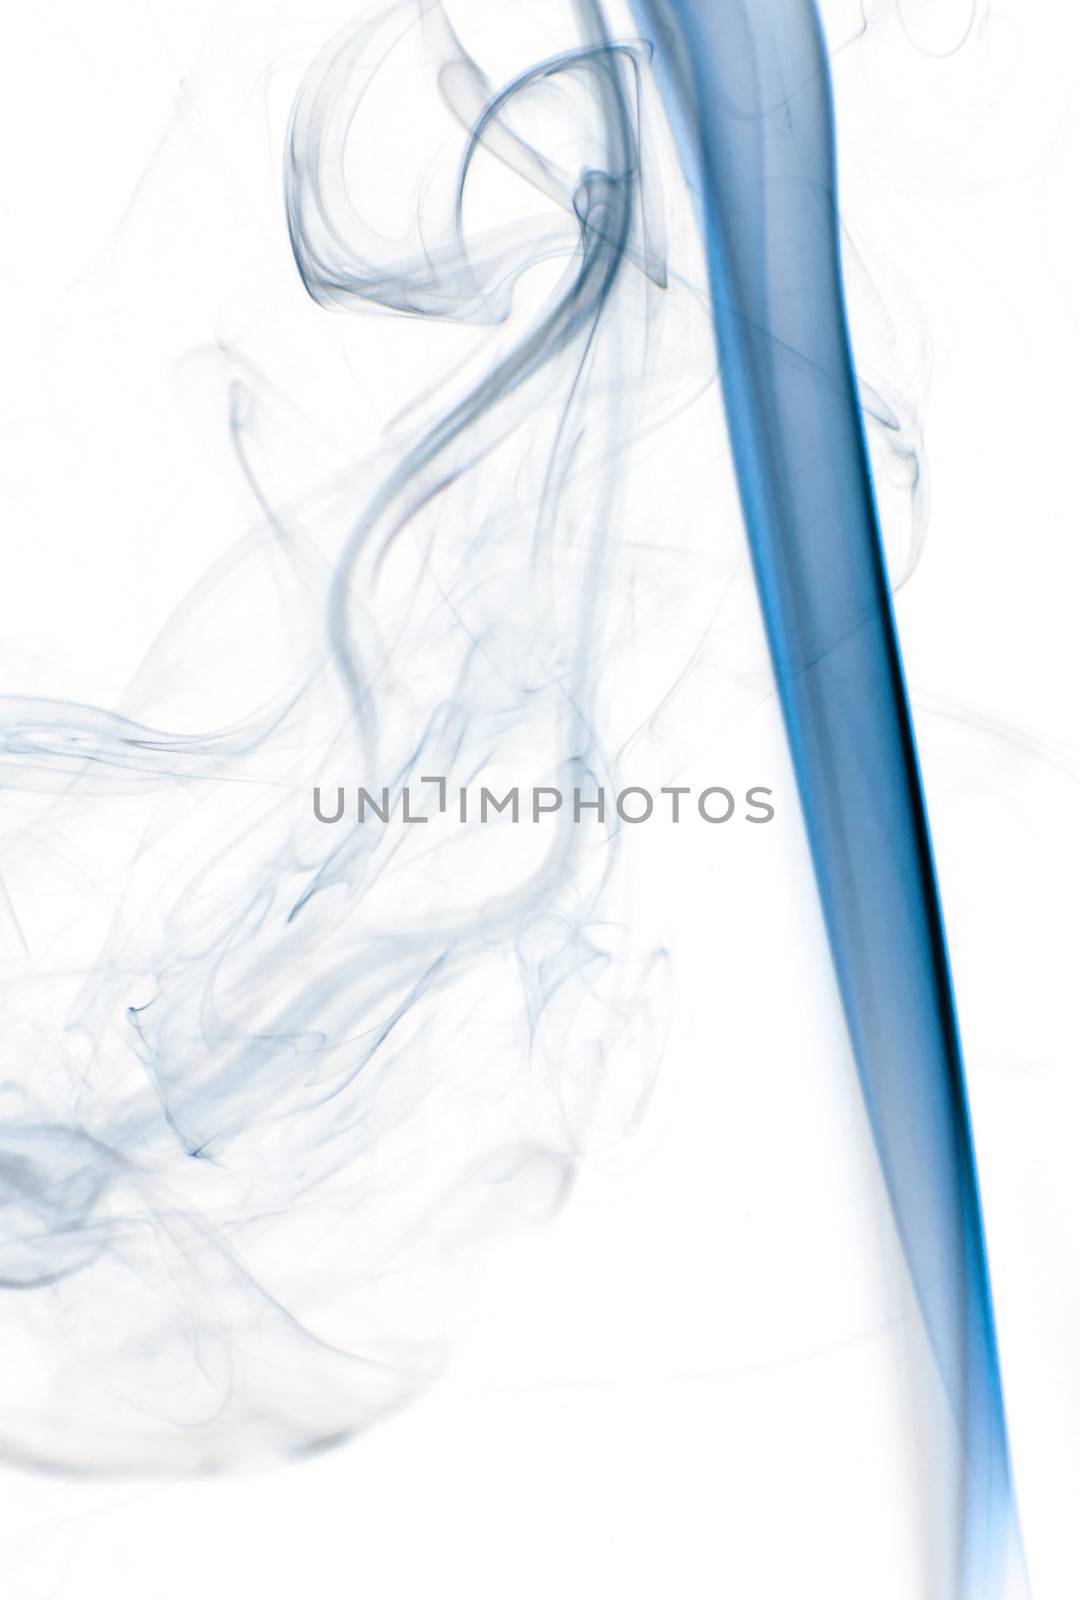 Blue insence smoke on white background, graphic resource.